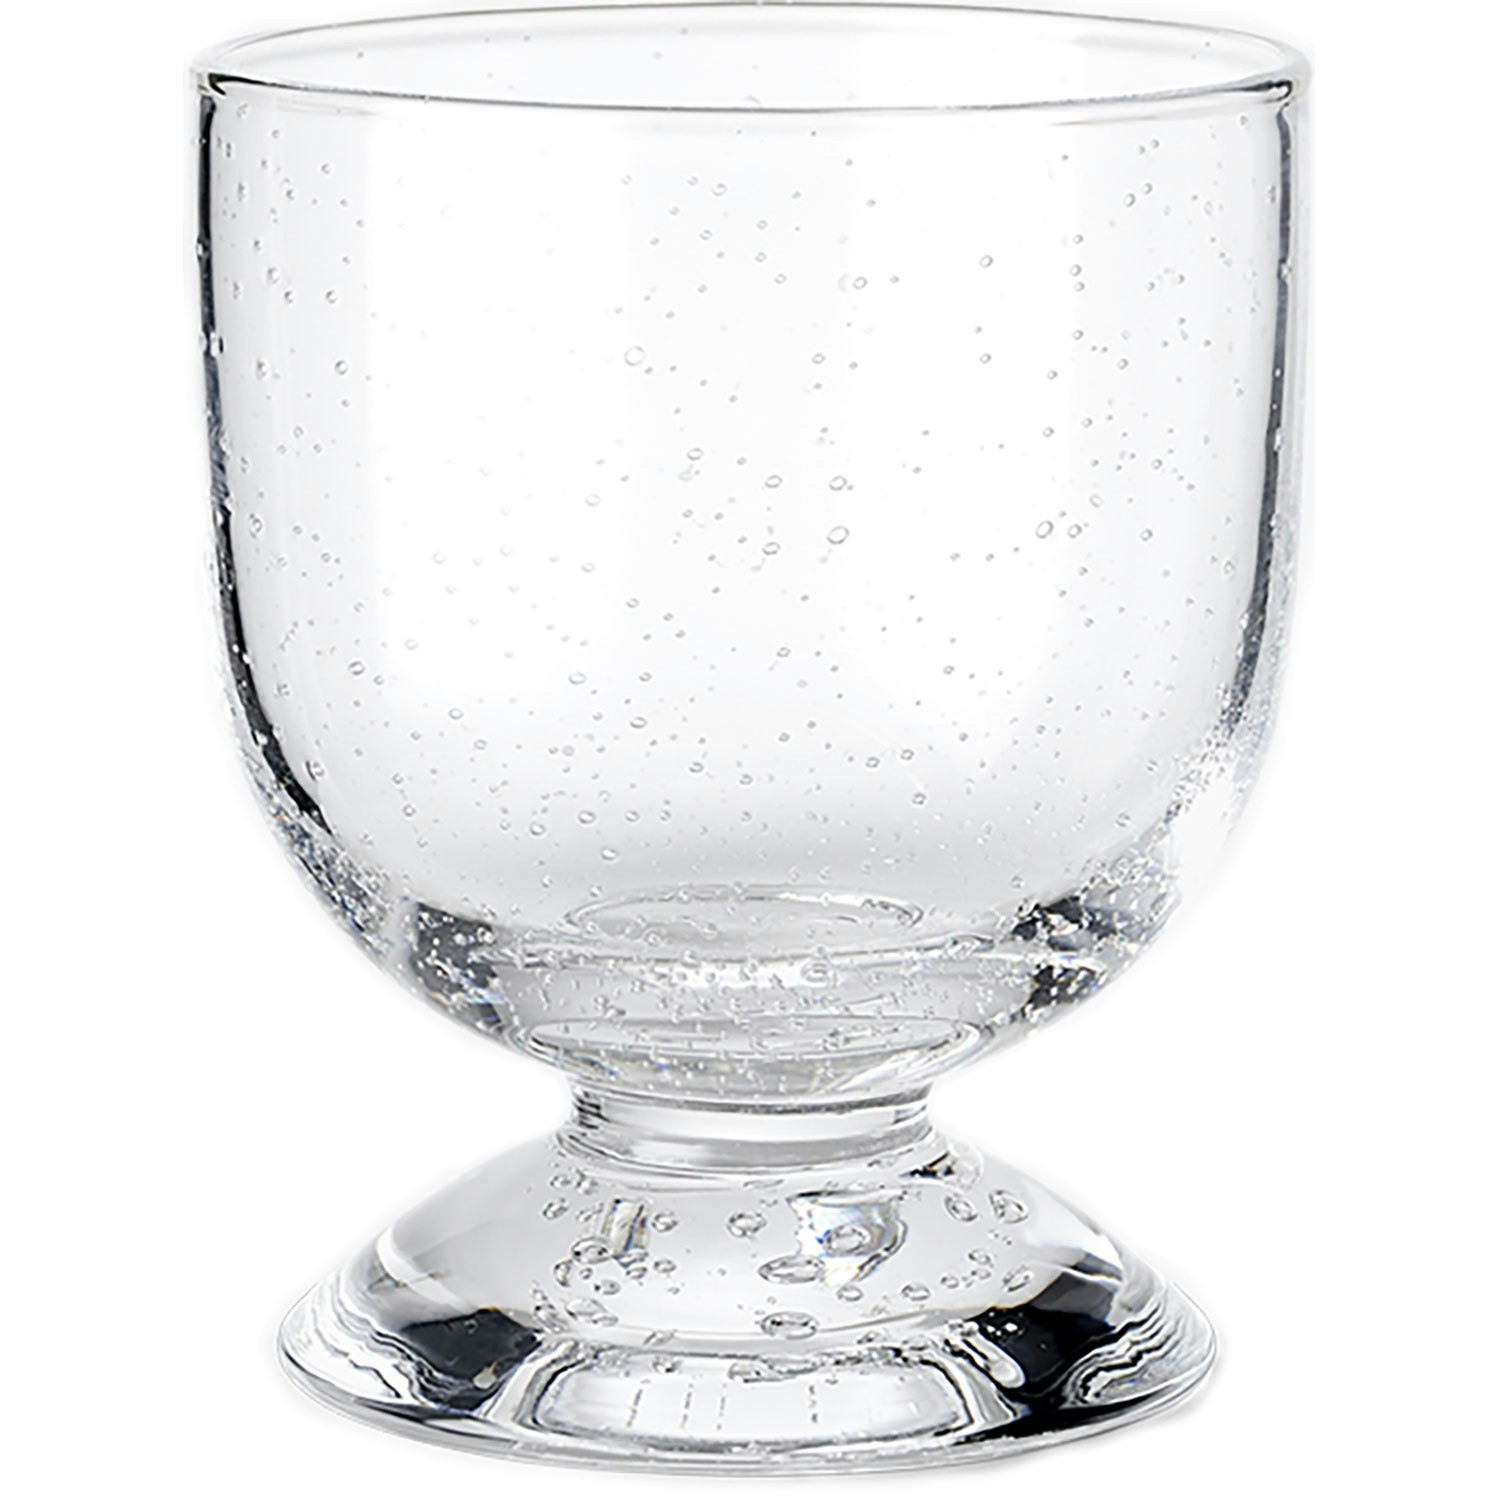 https://royaldesign.com/image/2/louise-roe-bubble-glass-shot-0